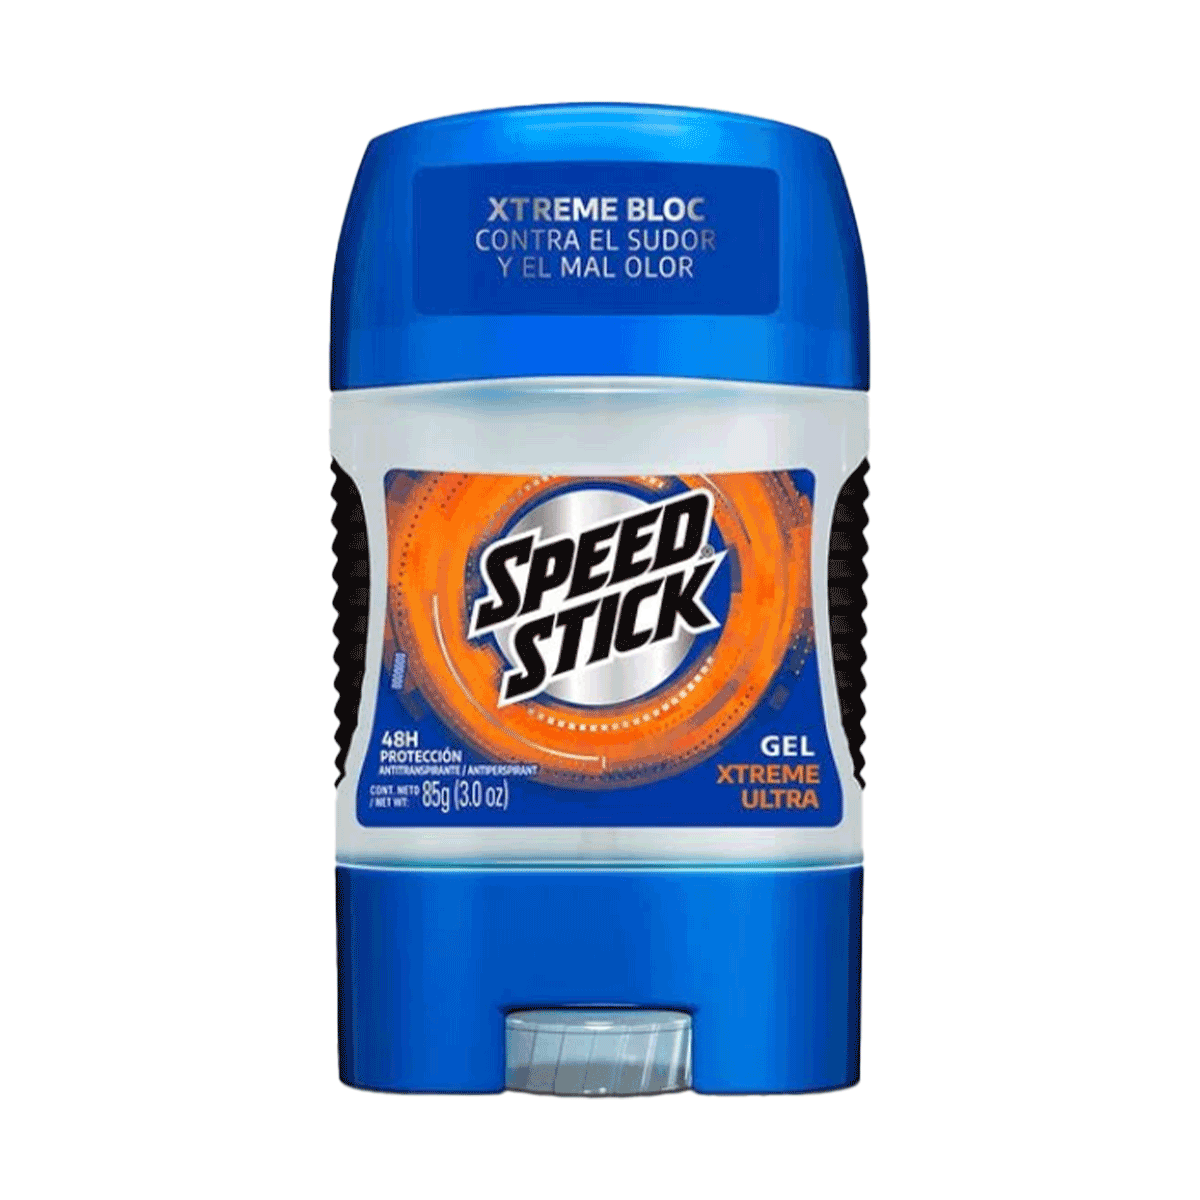 Desodorante Gel Xtreme-Tech Ultra Speed Stick 85 gr